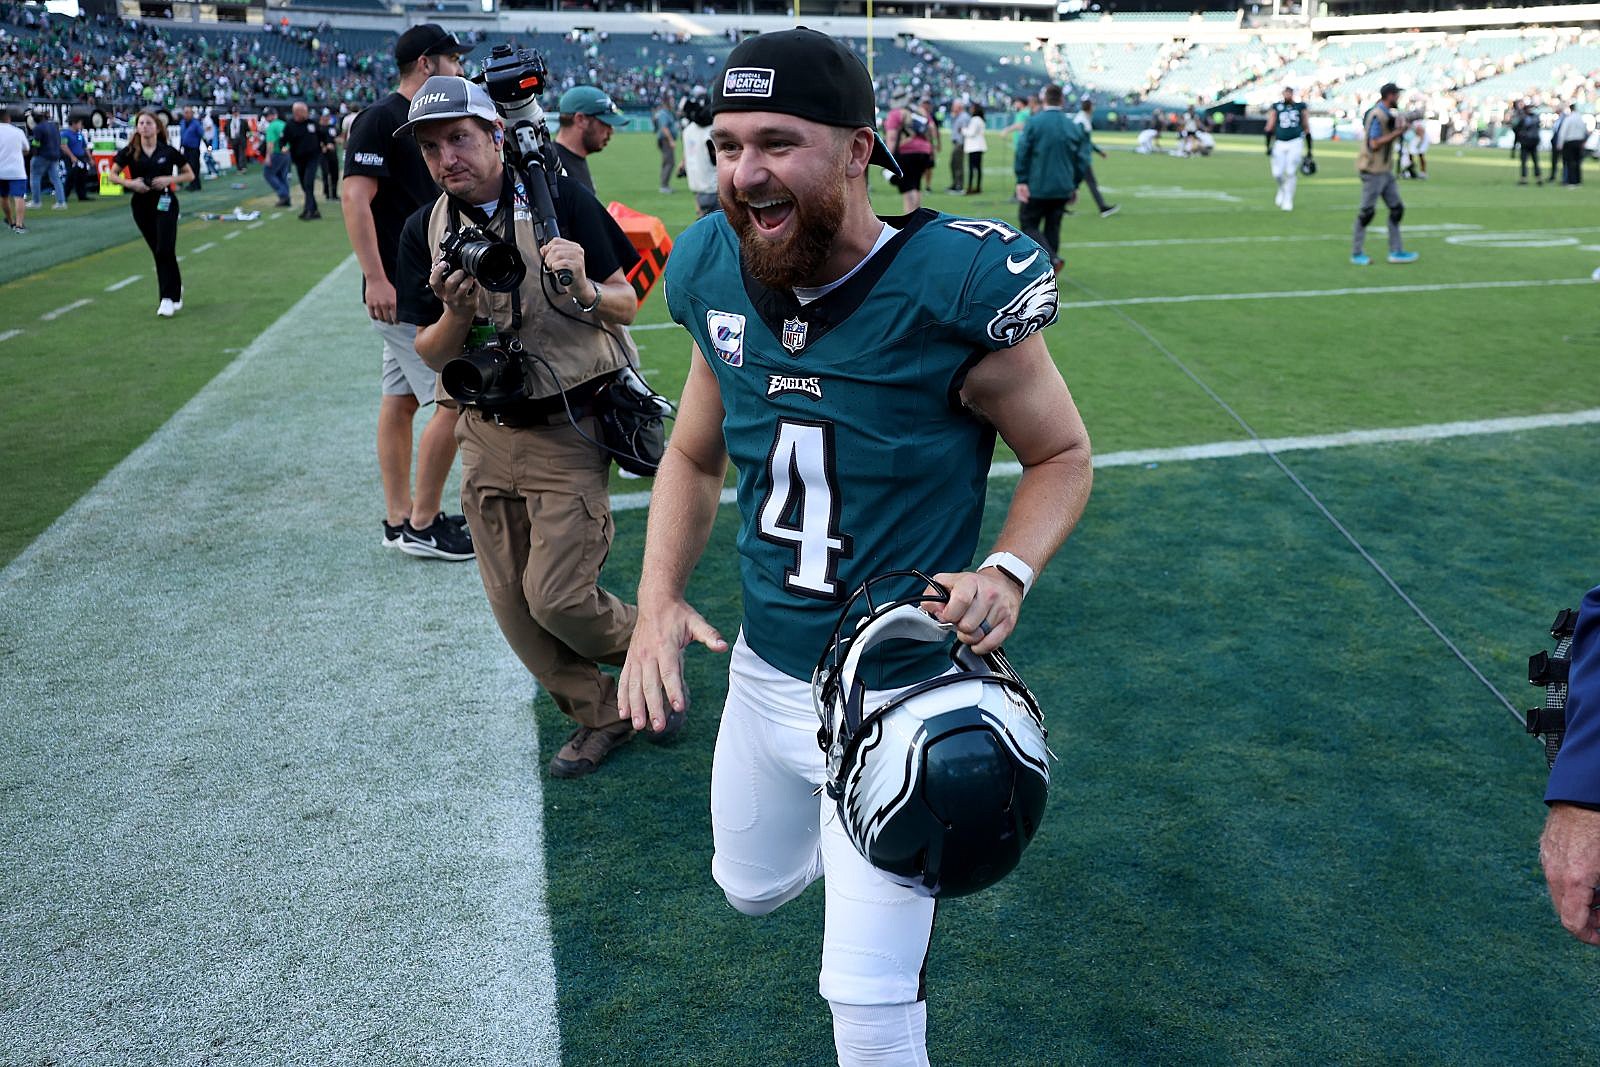 Eagles' kicker Jake Elliott named to his first NFL Pro Bowl